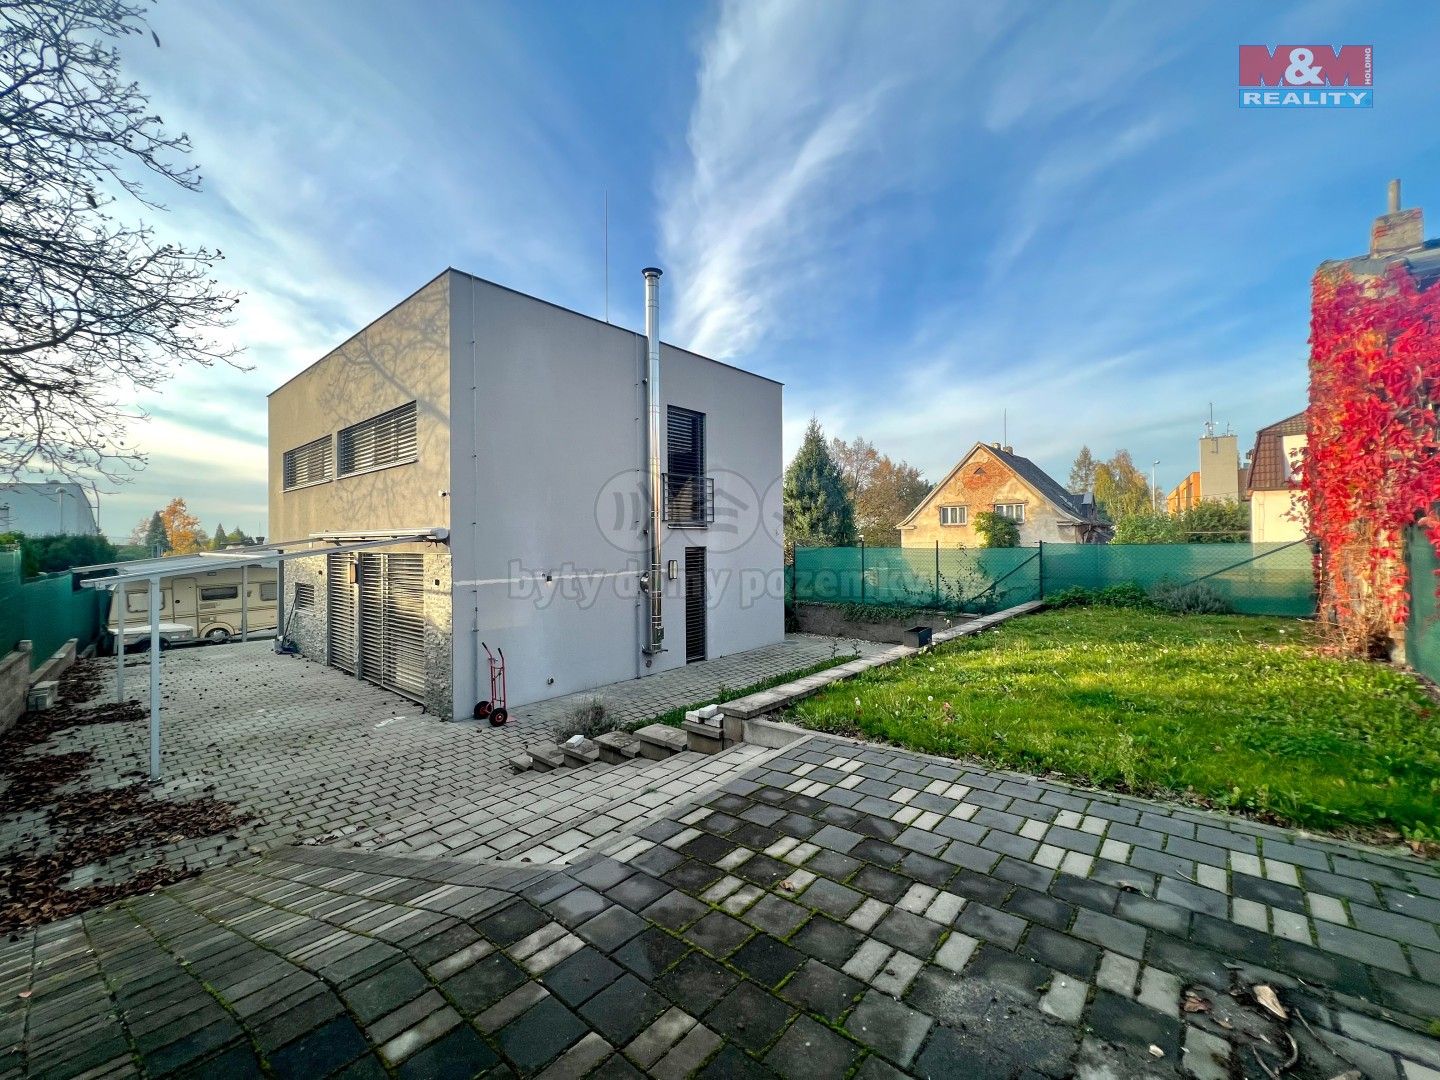 Rodinné domy, Chittussiho, Ostrava, 140 m²